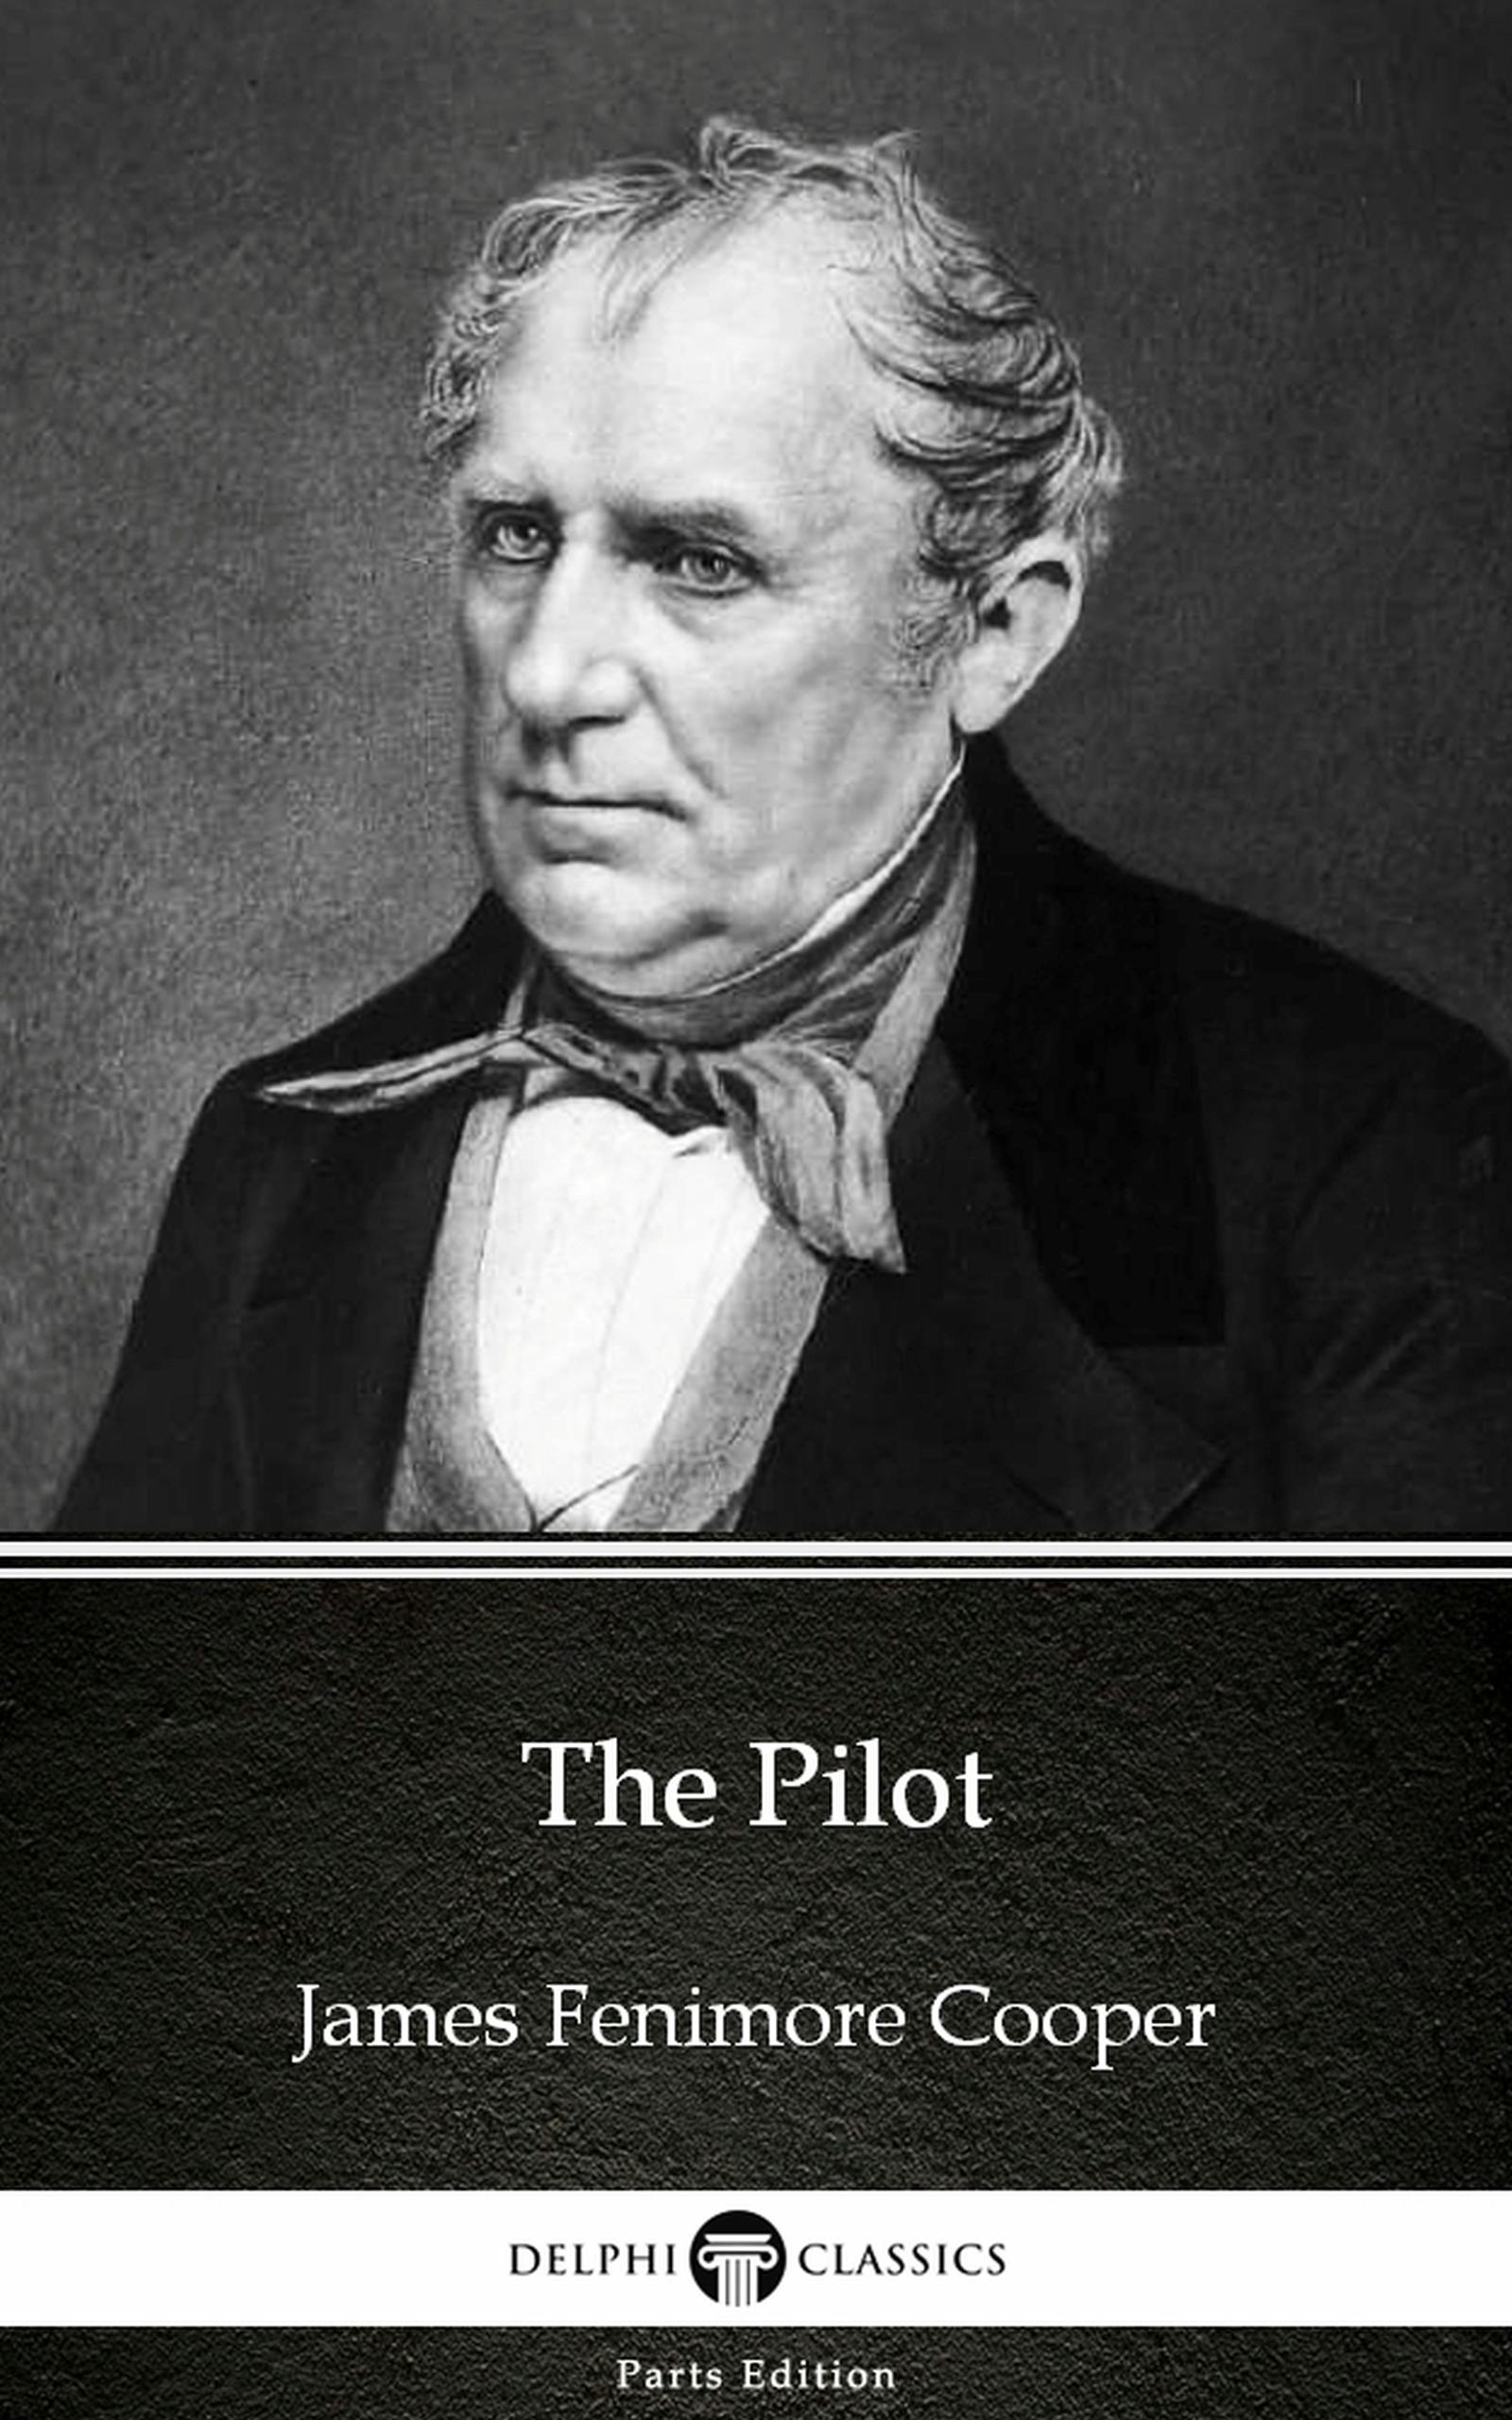 The Pilot by James Fenimore Cooper - Delphi Classics (Illustrated) - James Fenimore Cooper